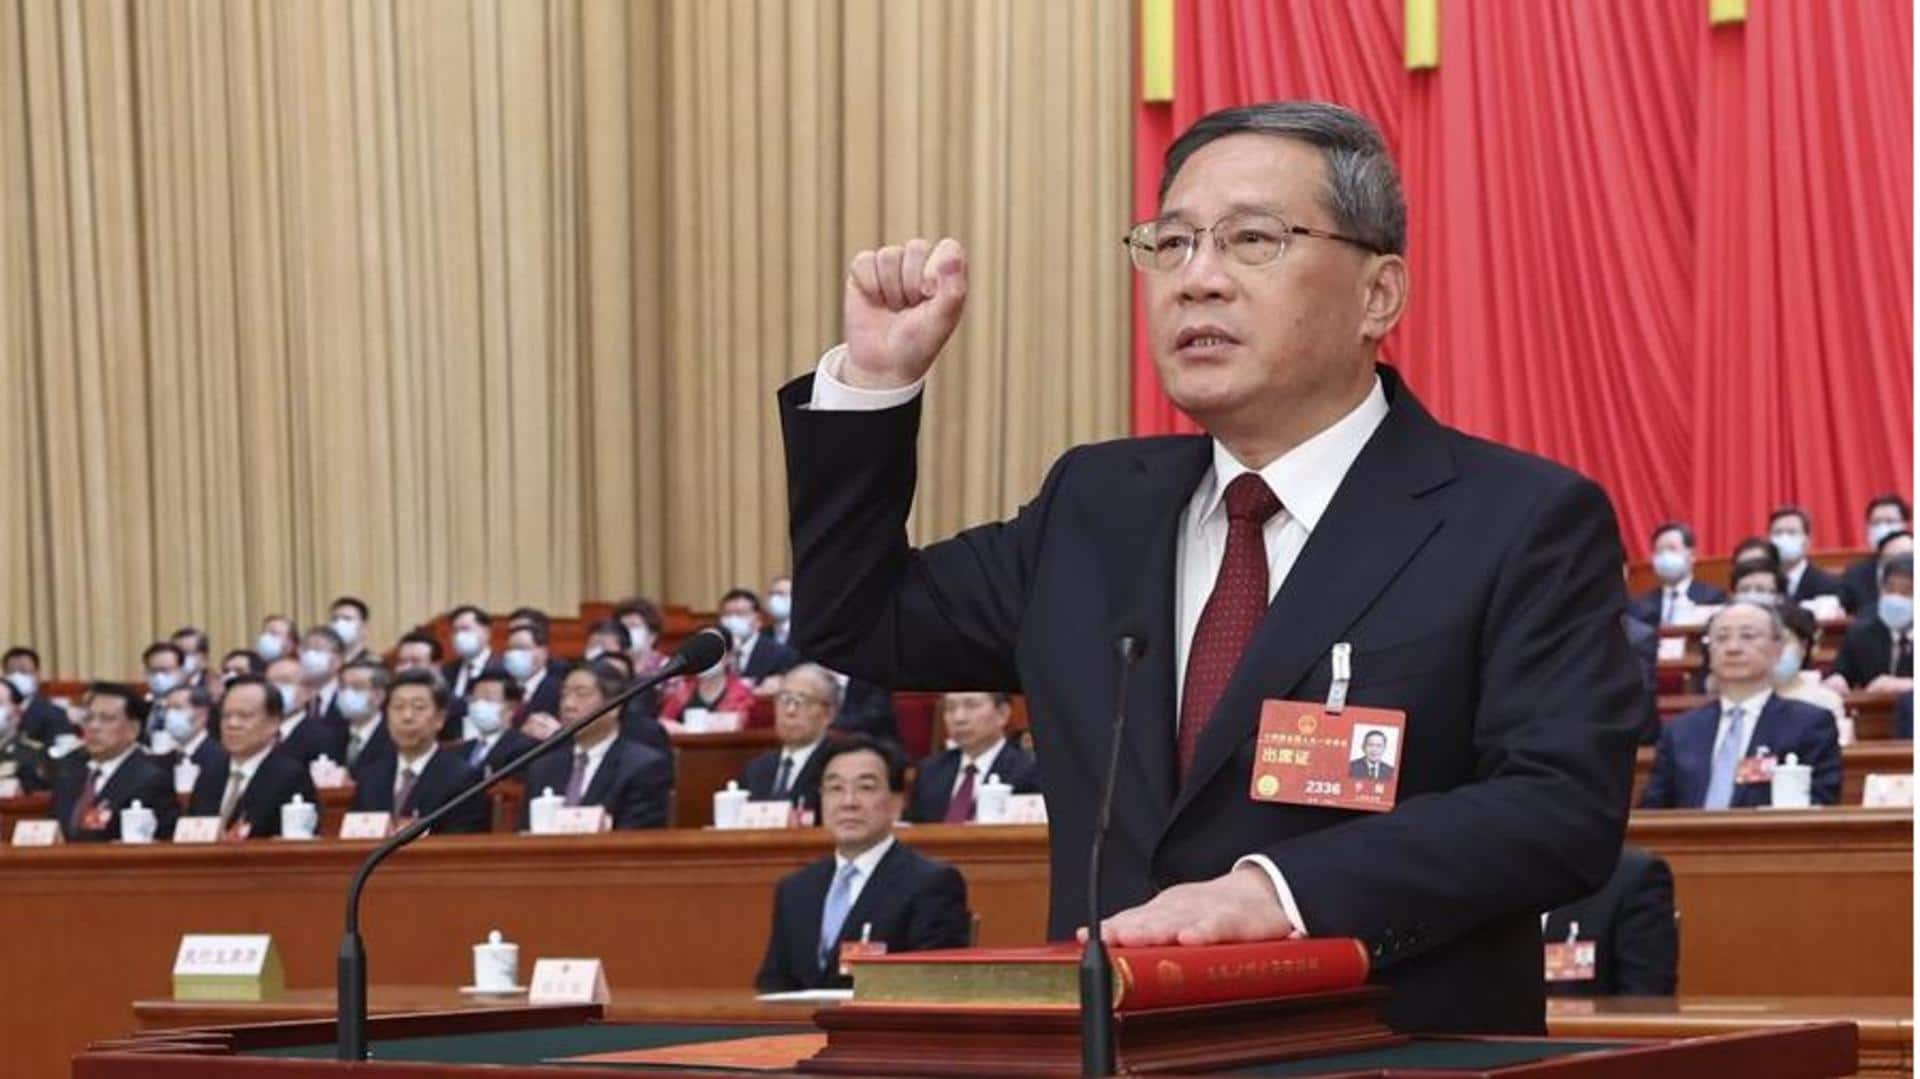 China: President Xi Jinping's confidant Li Qiang appointed new premier